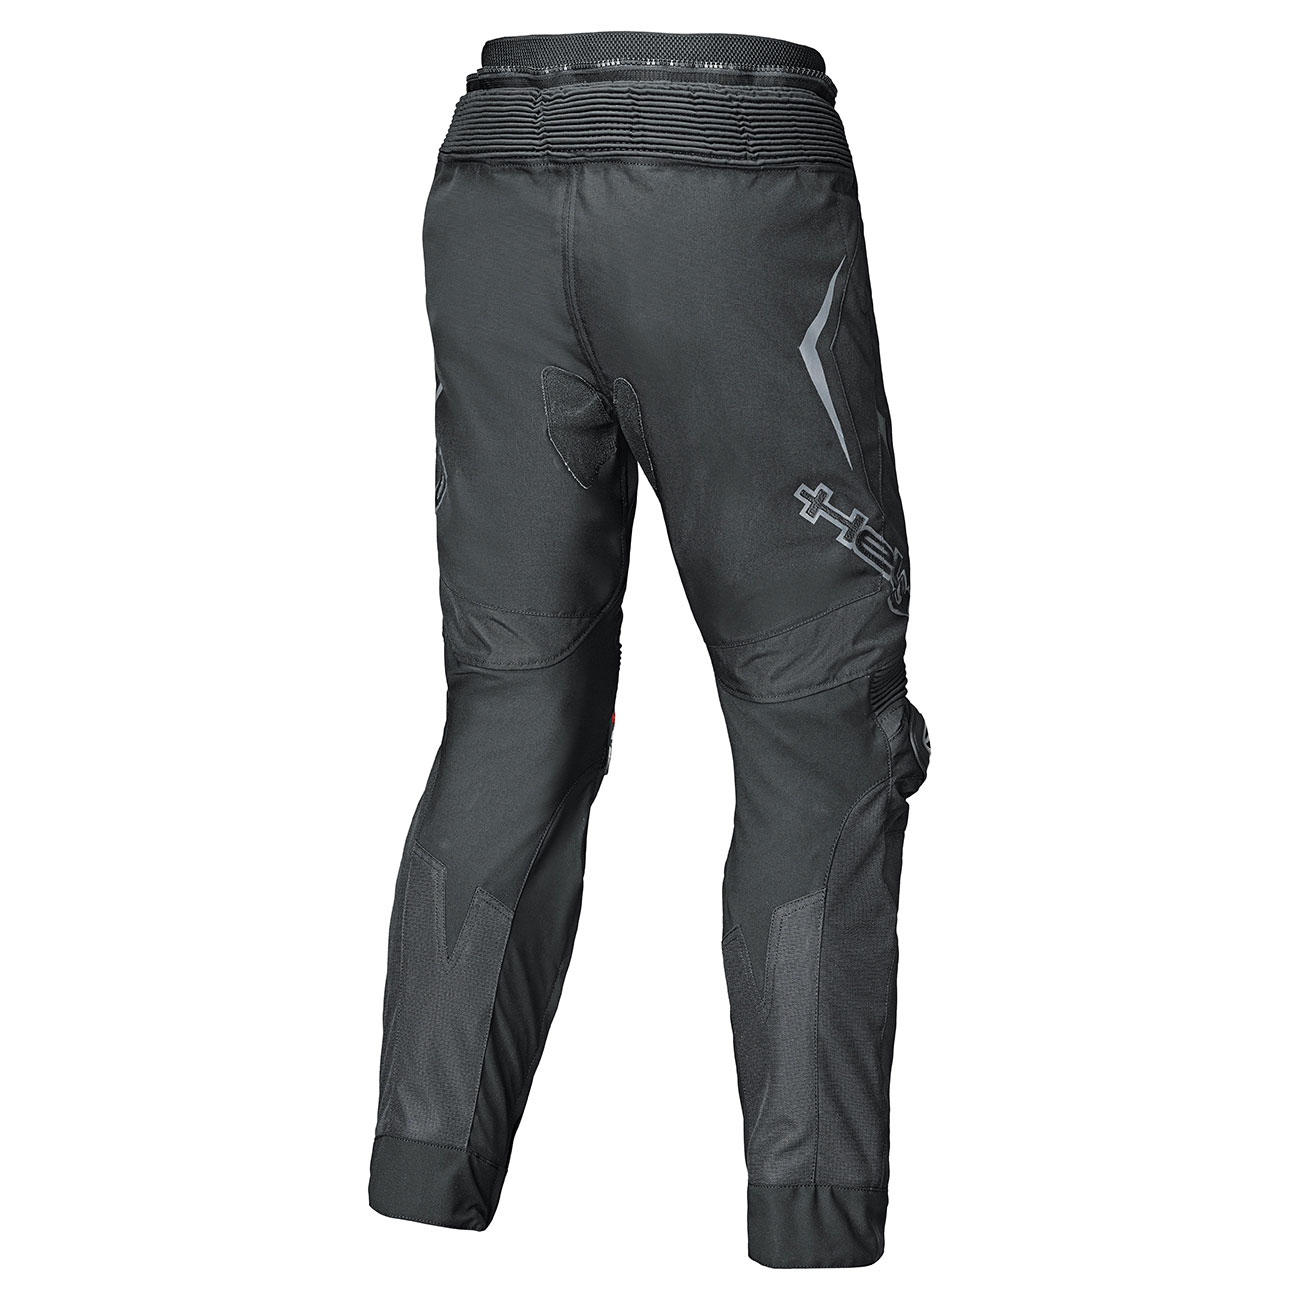 Grind SRX Pantalone sport